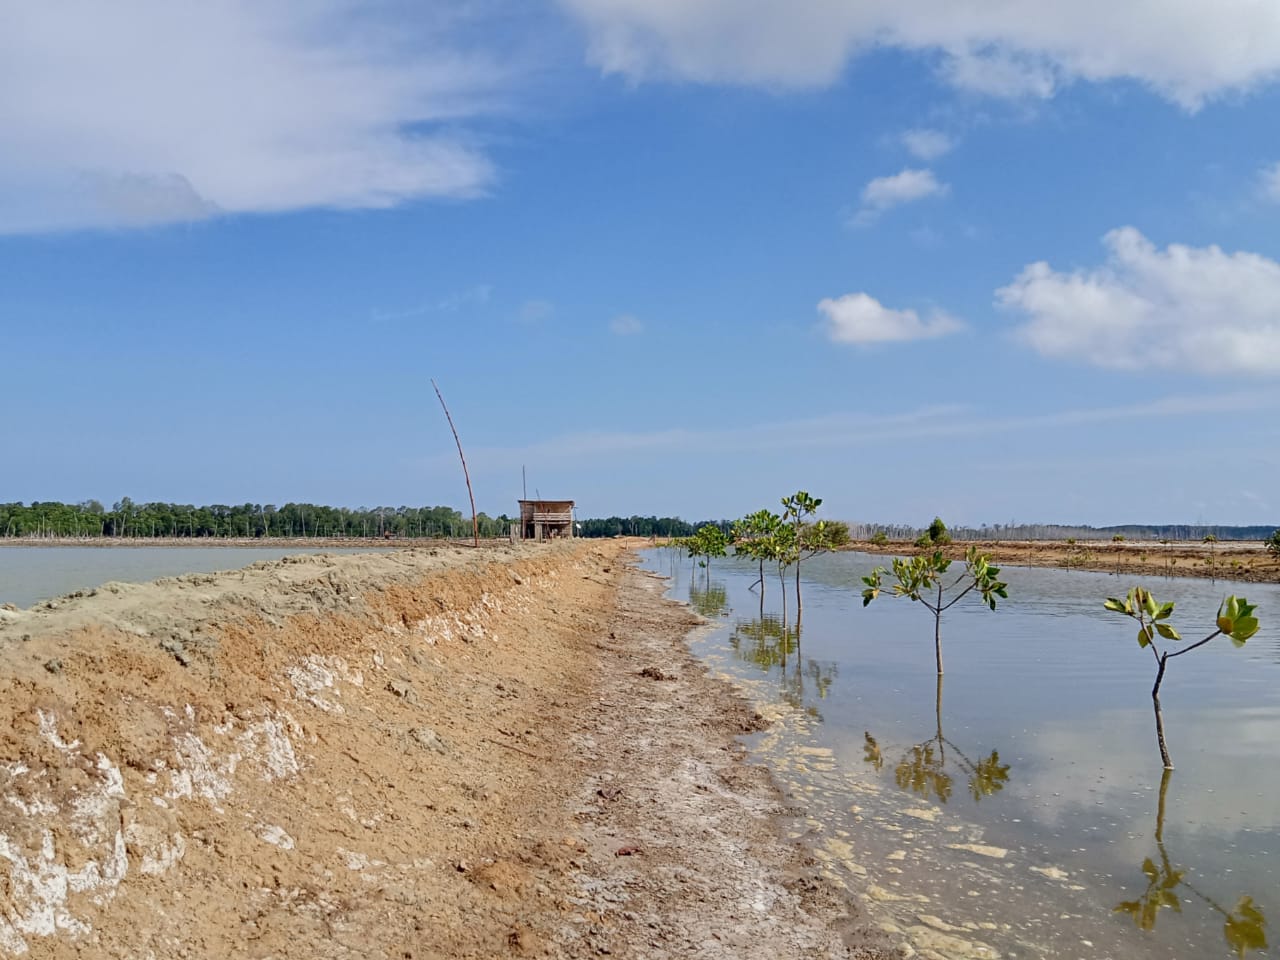 Menteri Edhy Prabowo Bakal Panen Bandeng di Kawasan Hutan Mangrove yang Rusak